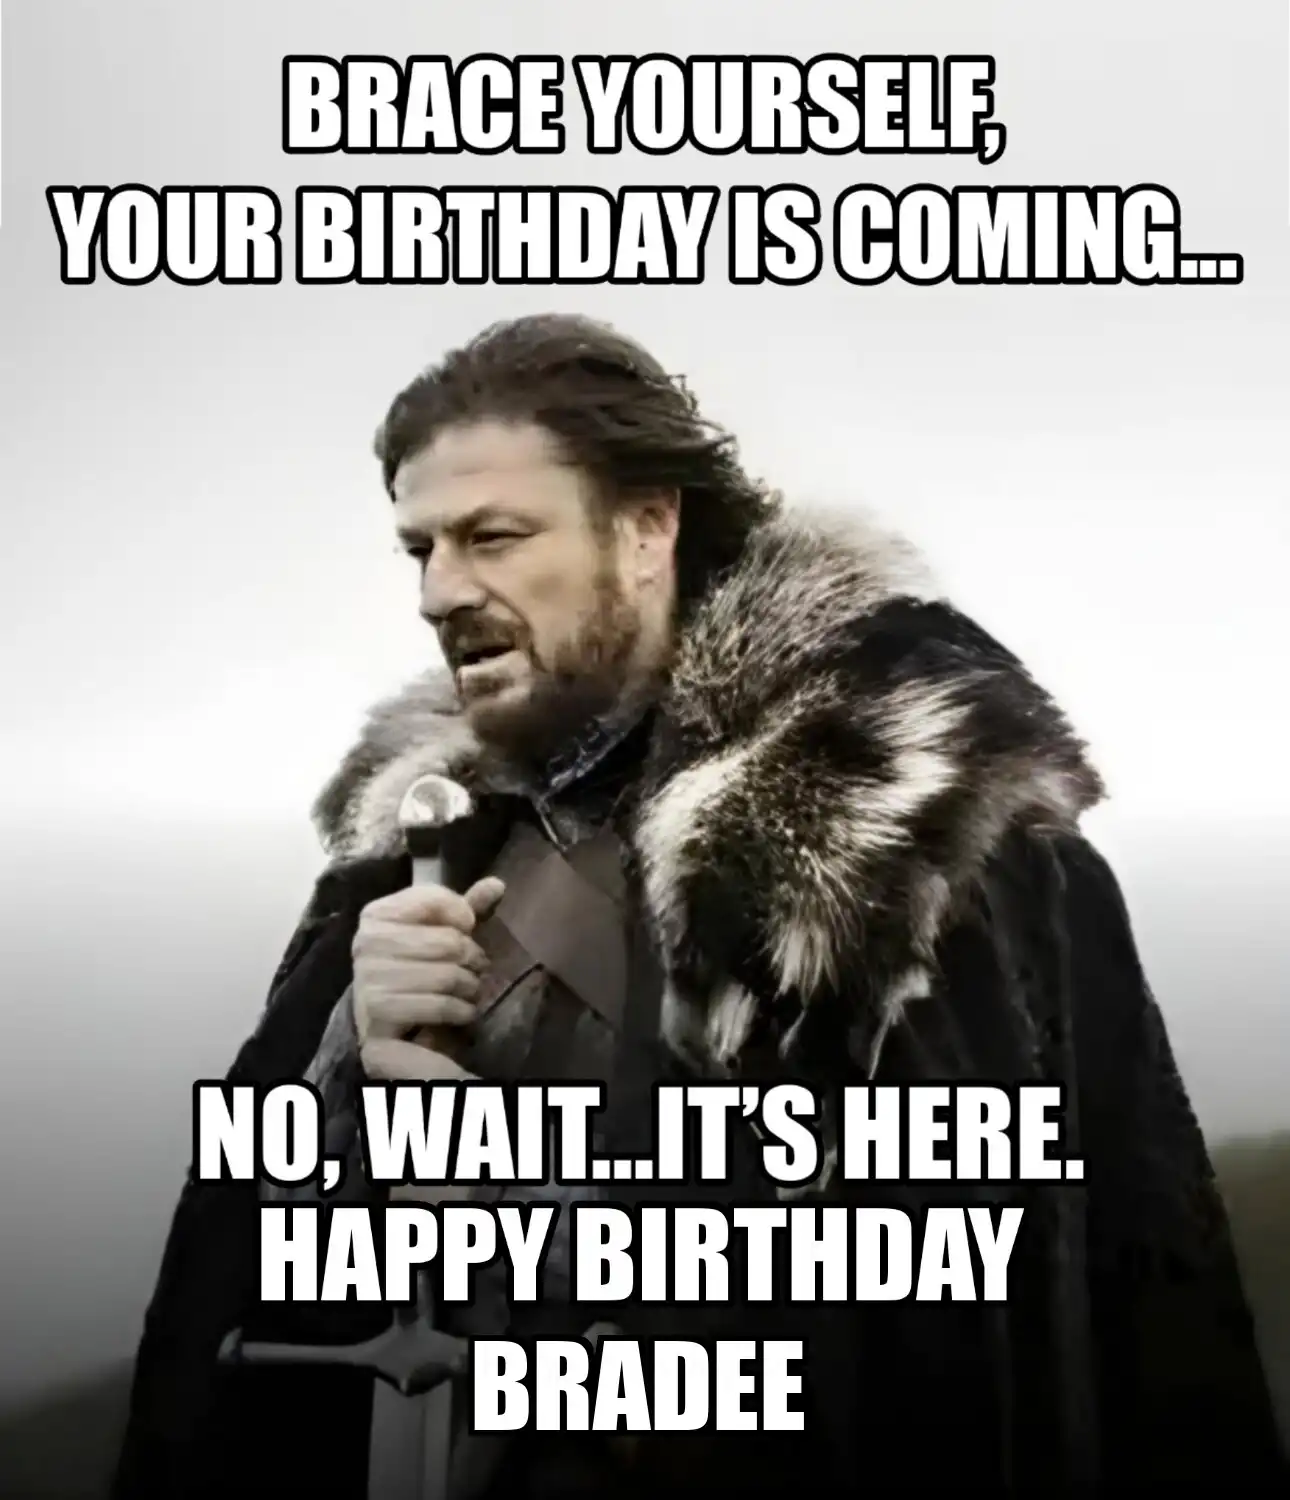 Happy Birthday Bradee Brace Yourself Your Birthday Is Coming Meme